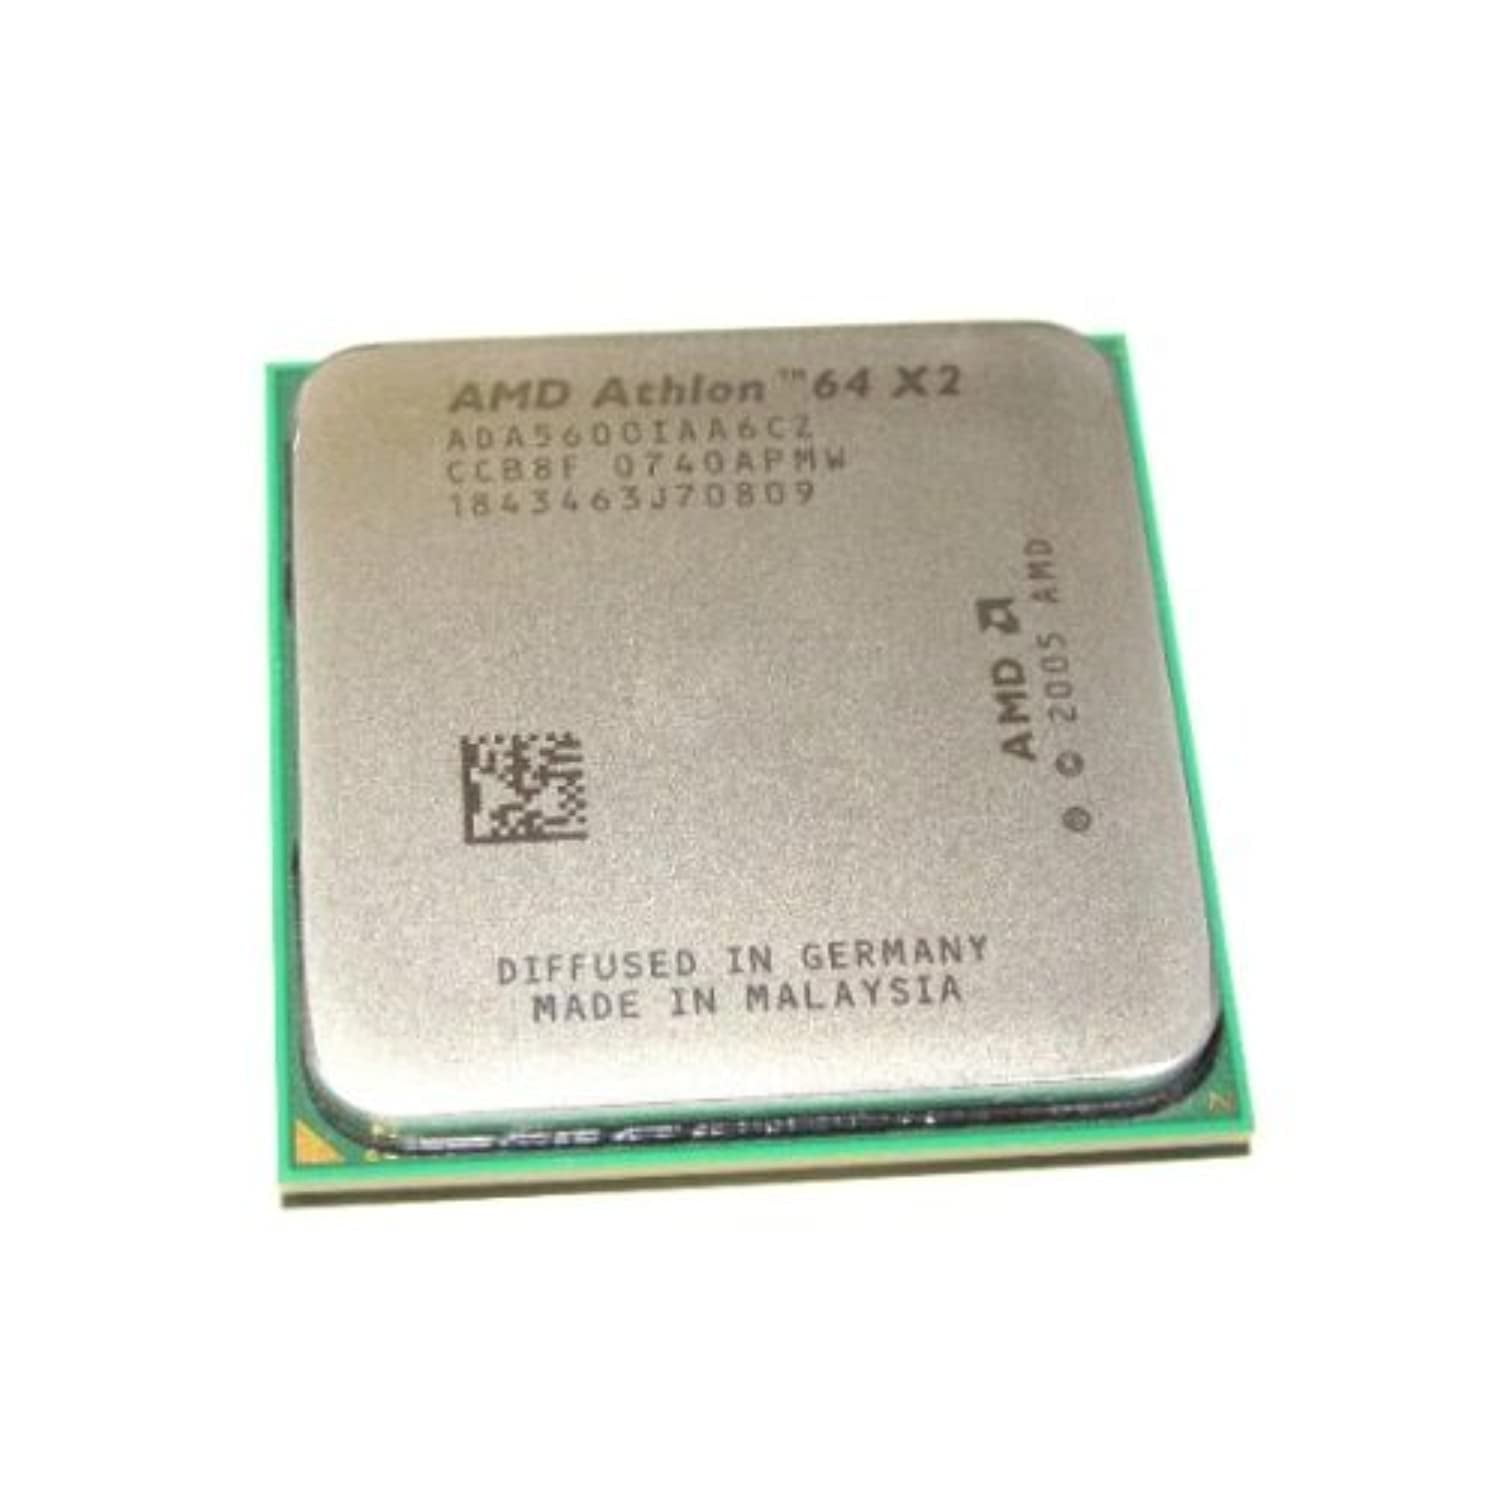 Athlon x2 4400. AMD Athlon 64 x2 ada5600iaa6cz. AMD Athlon 64 x2 5000+. AMD Athlon 64 2001 процессор. AMD Athlon 64 x2 корпус.